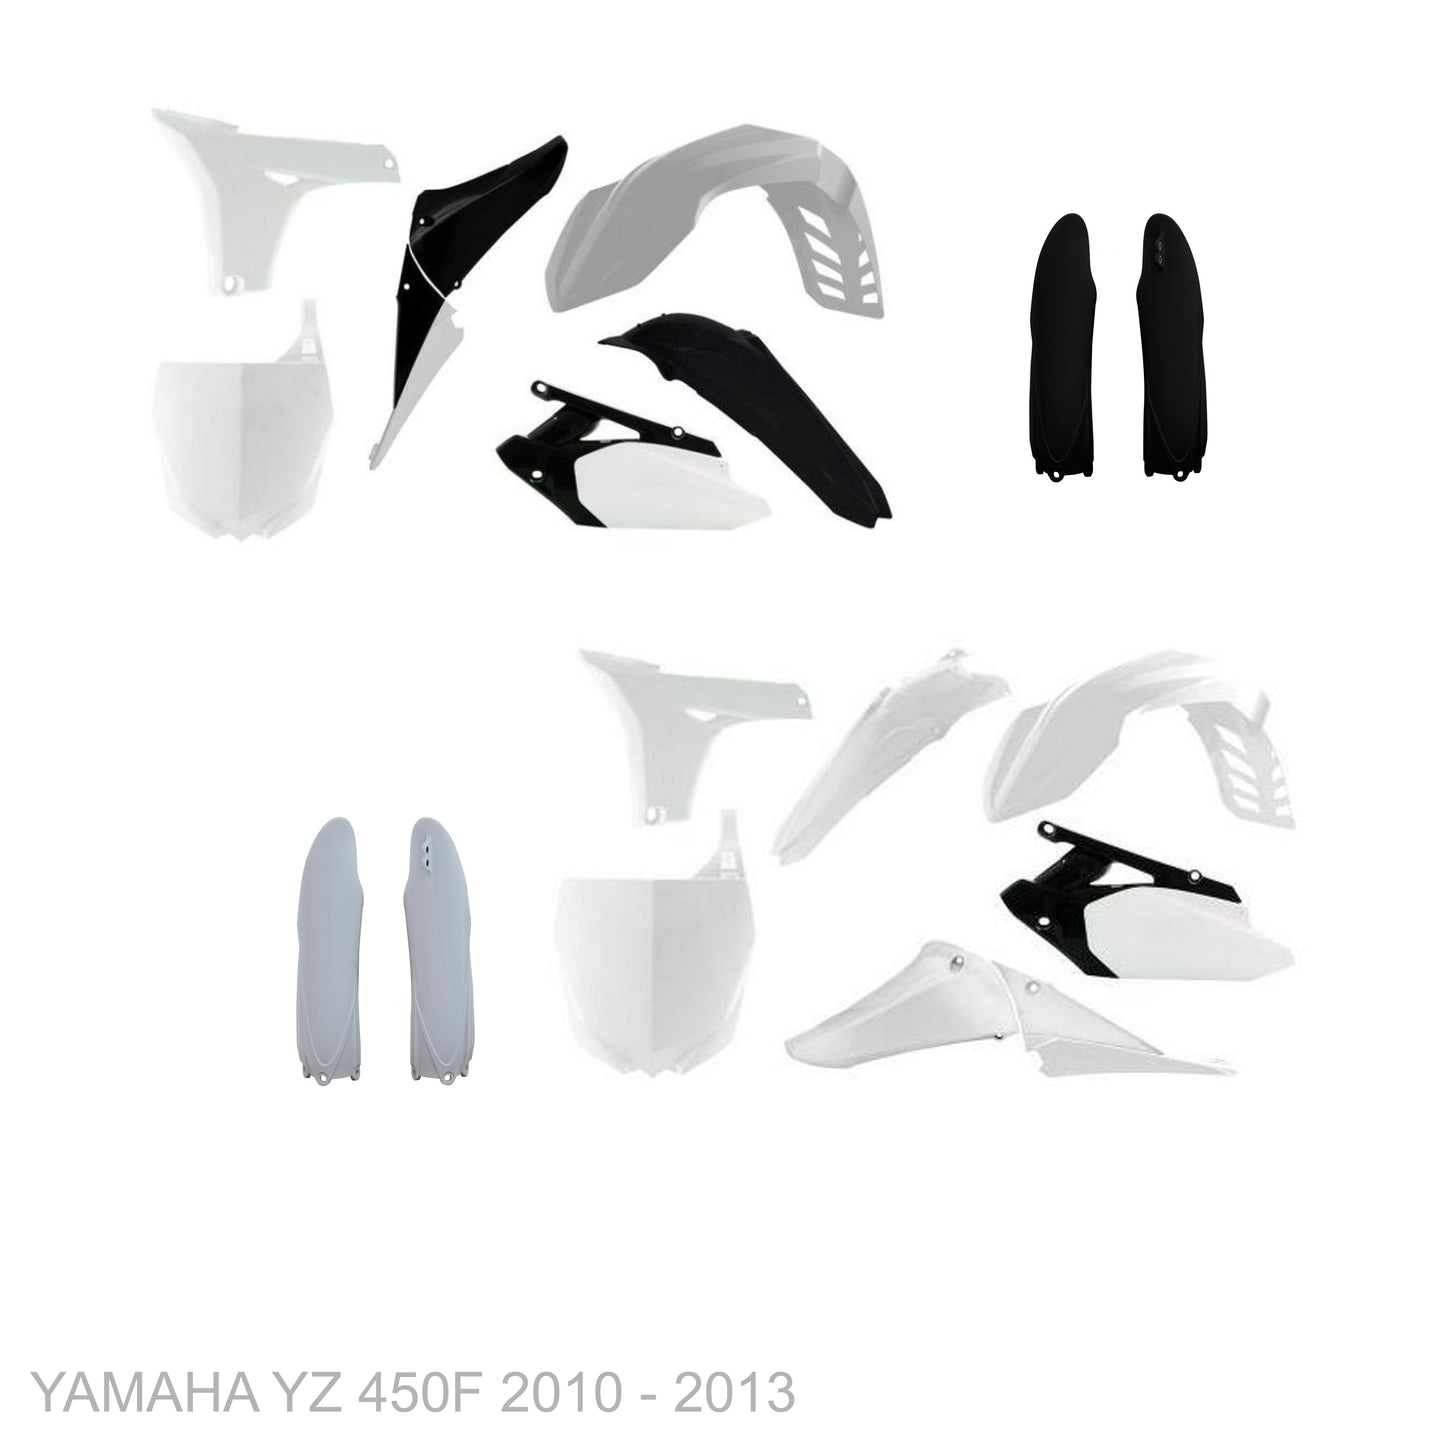 YAMAHA YZ 450F 2010 - 2013 Start From Scratch Graphics Kits